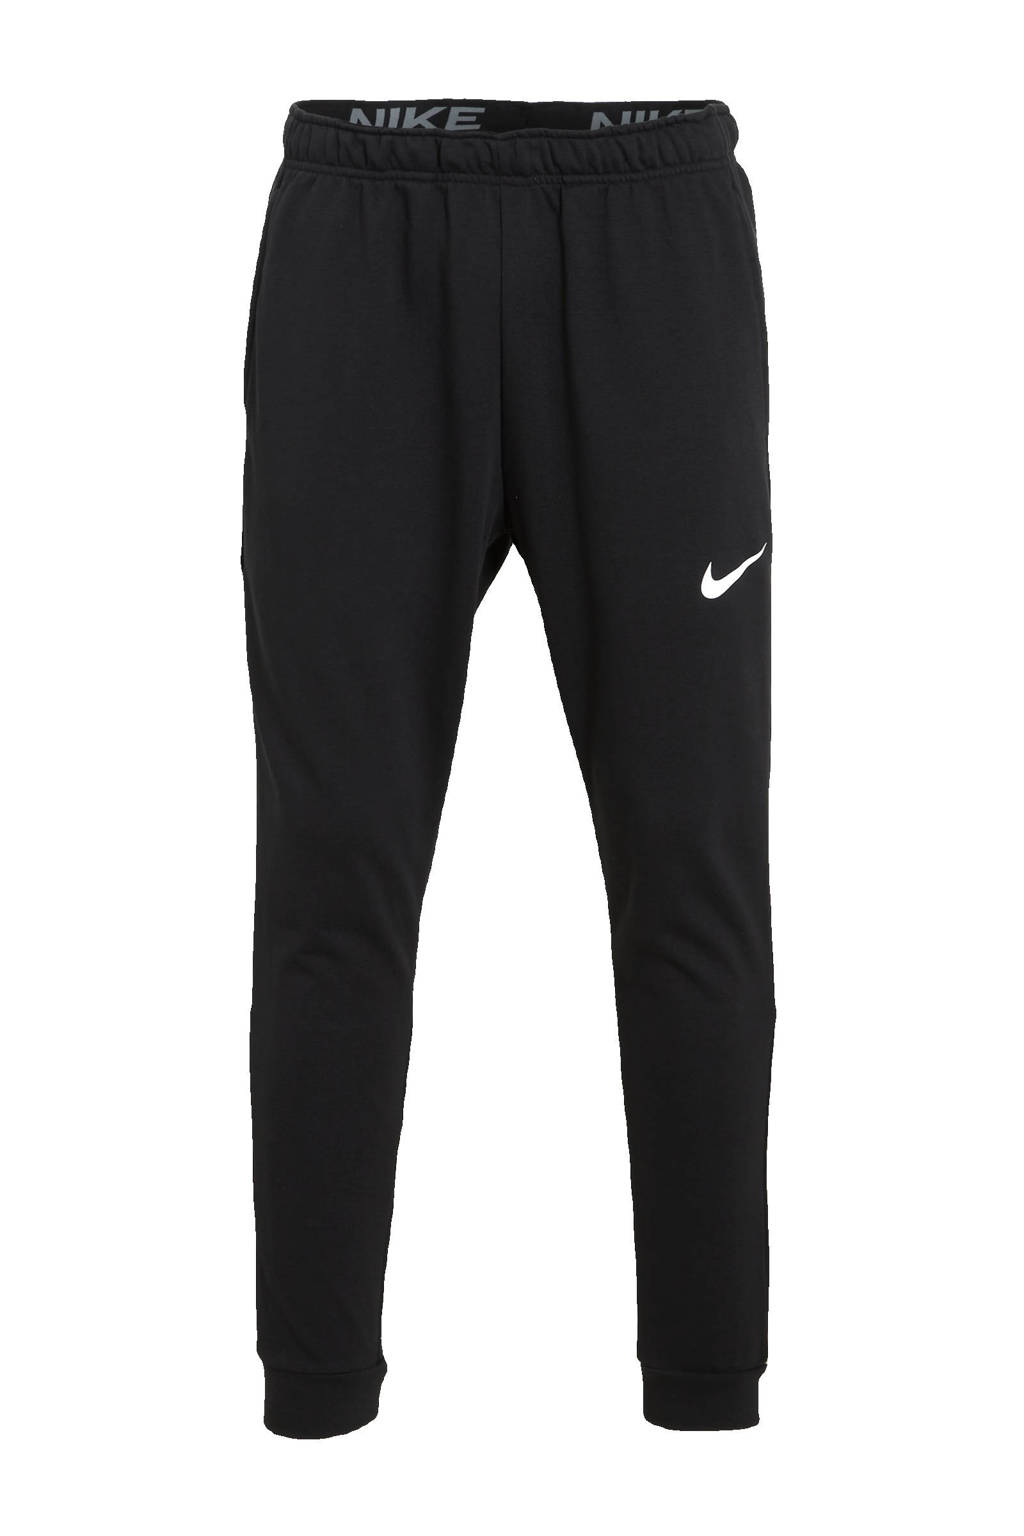 Nike   joggingbroek zwart/wit, Zwart/wit